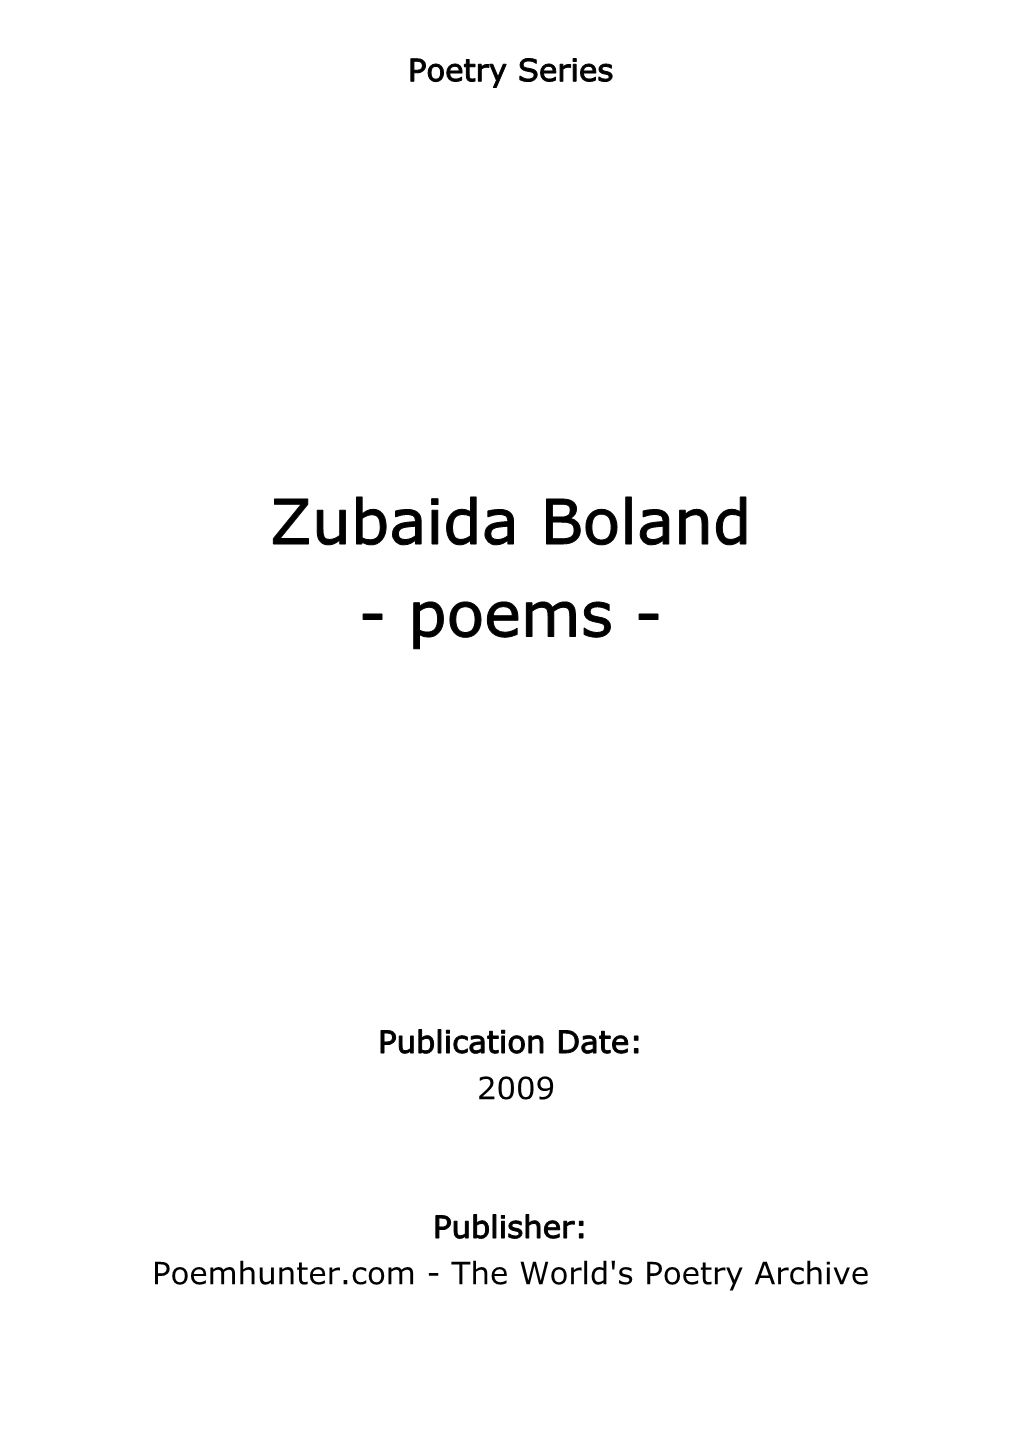 Zubaida Boland - Poems